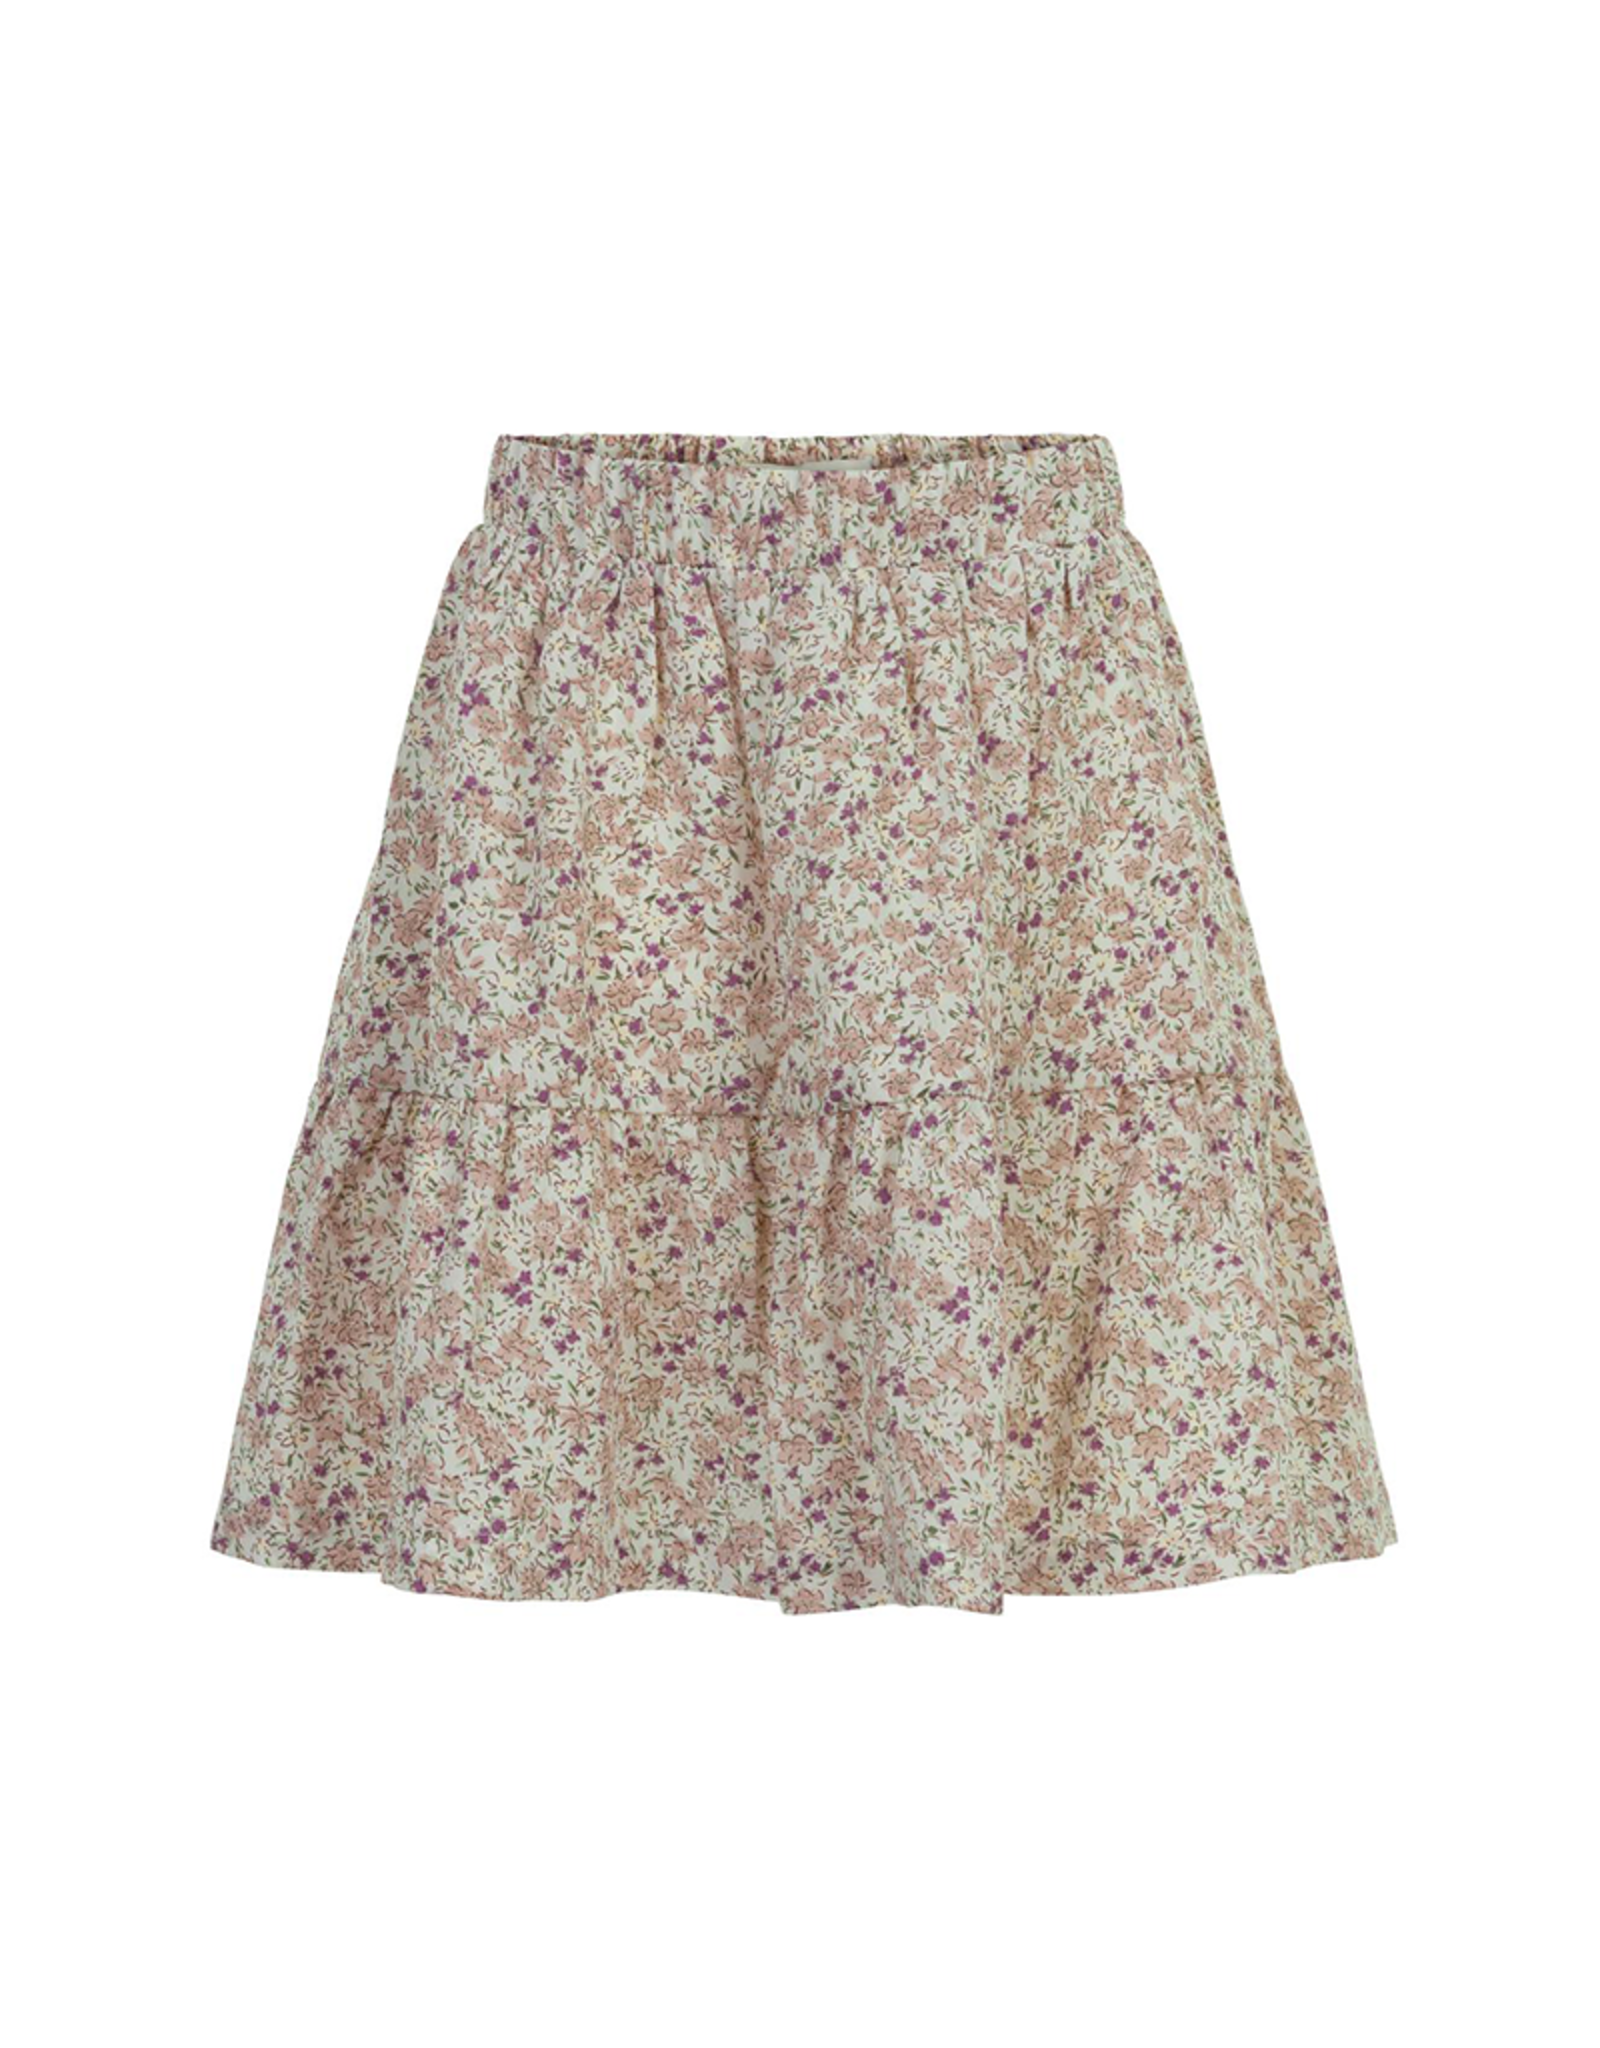 Creamie 821952 Purple/Cream Floral Skirt